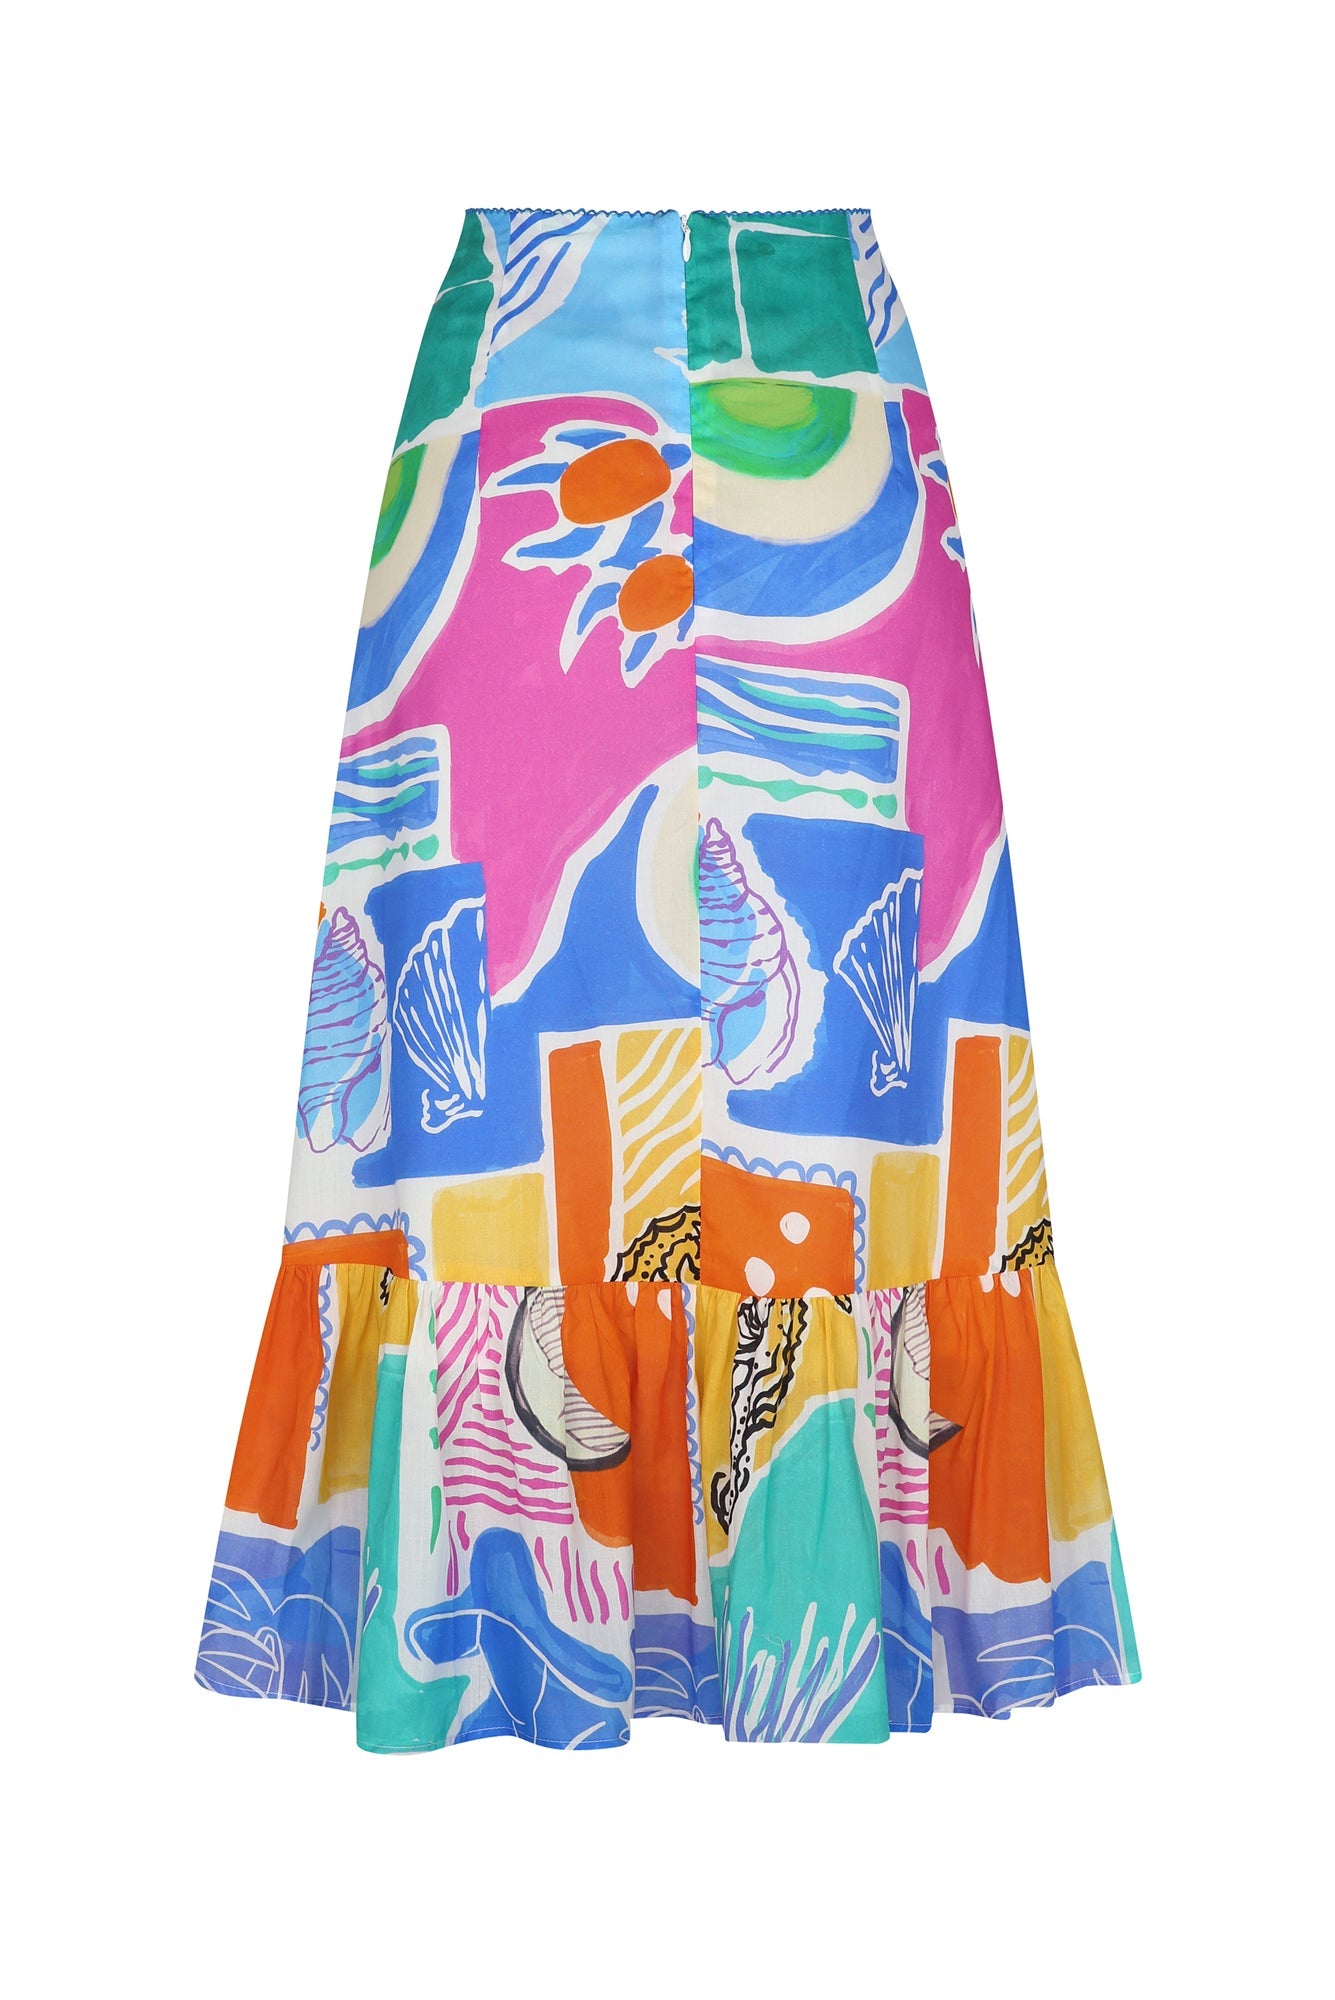 Unu Skirt in Arpi Print